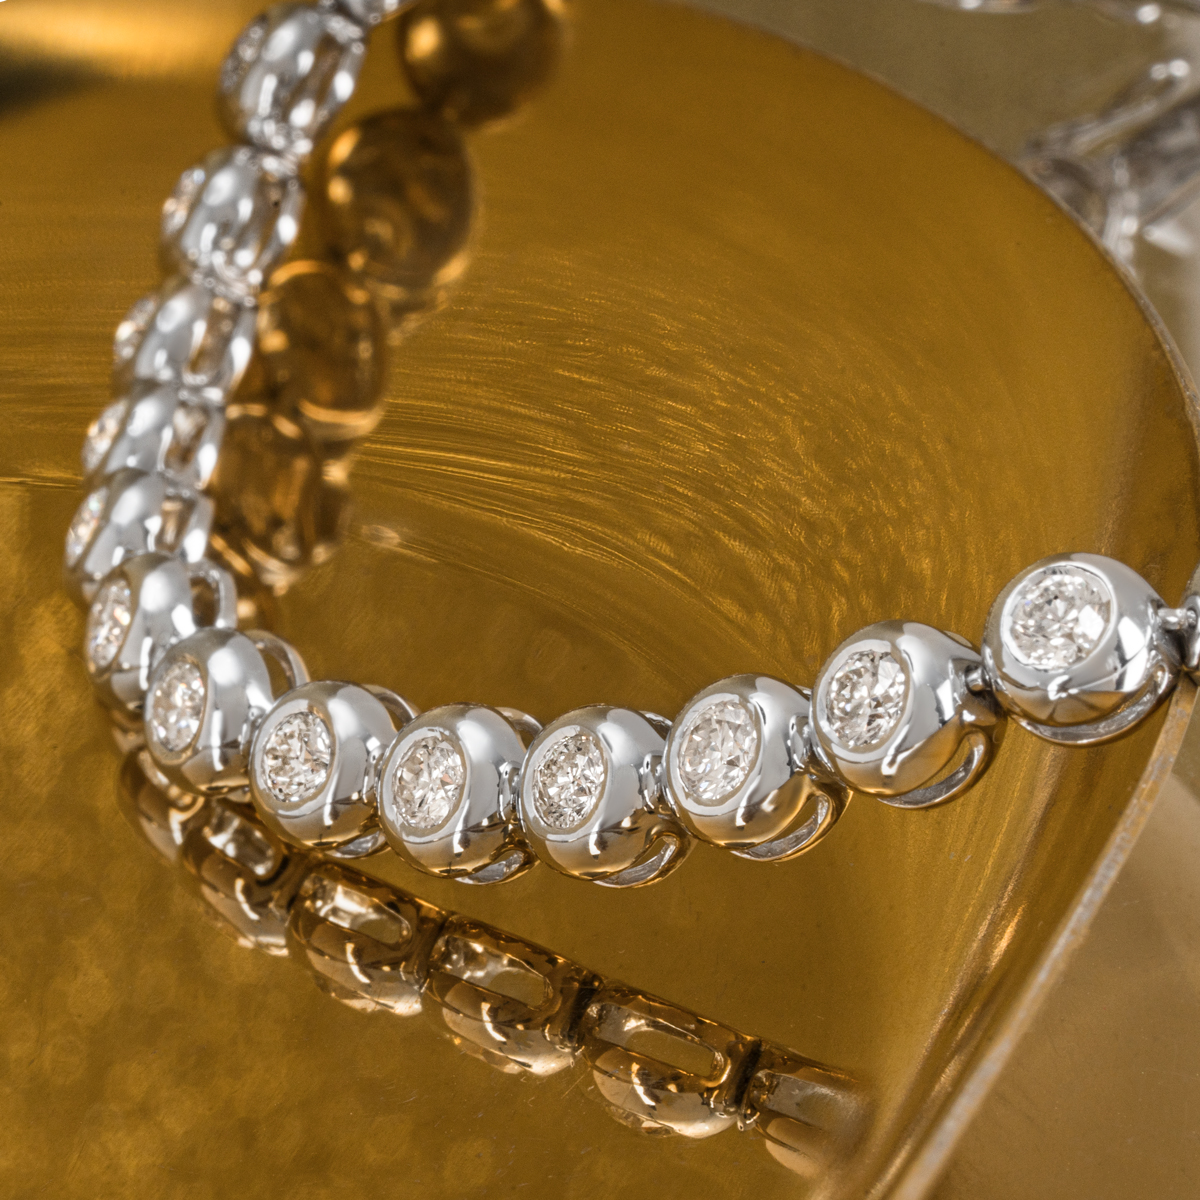 White Gold Diamond Line Bracelet 3.25ct TDW